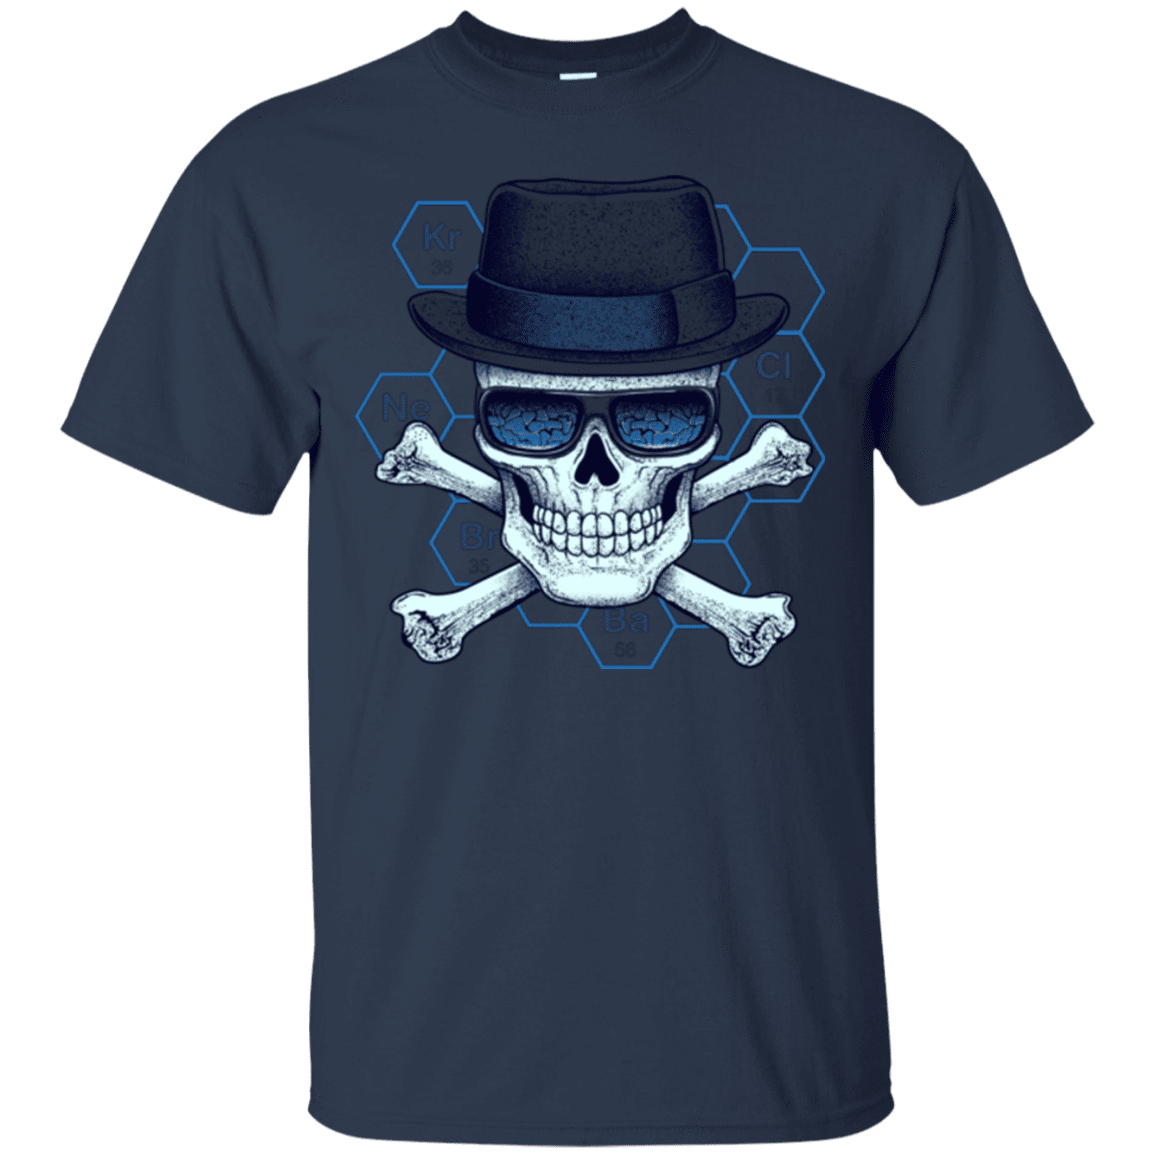 T-Shirts Navy / Small Chemical head T-Shirt